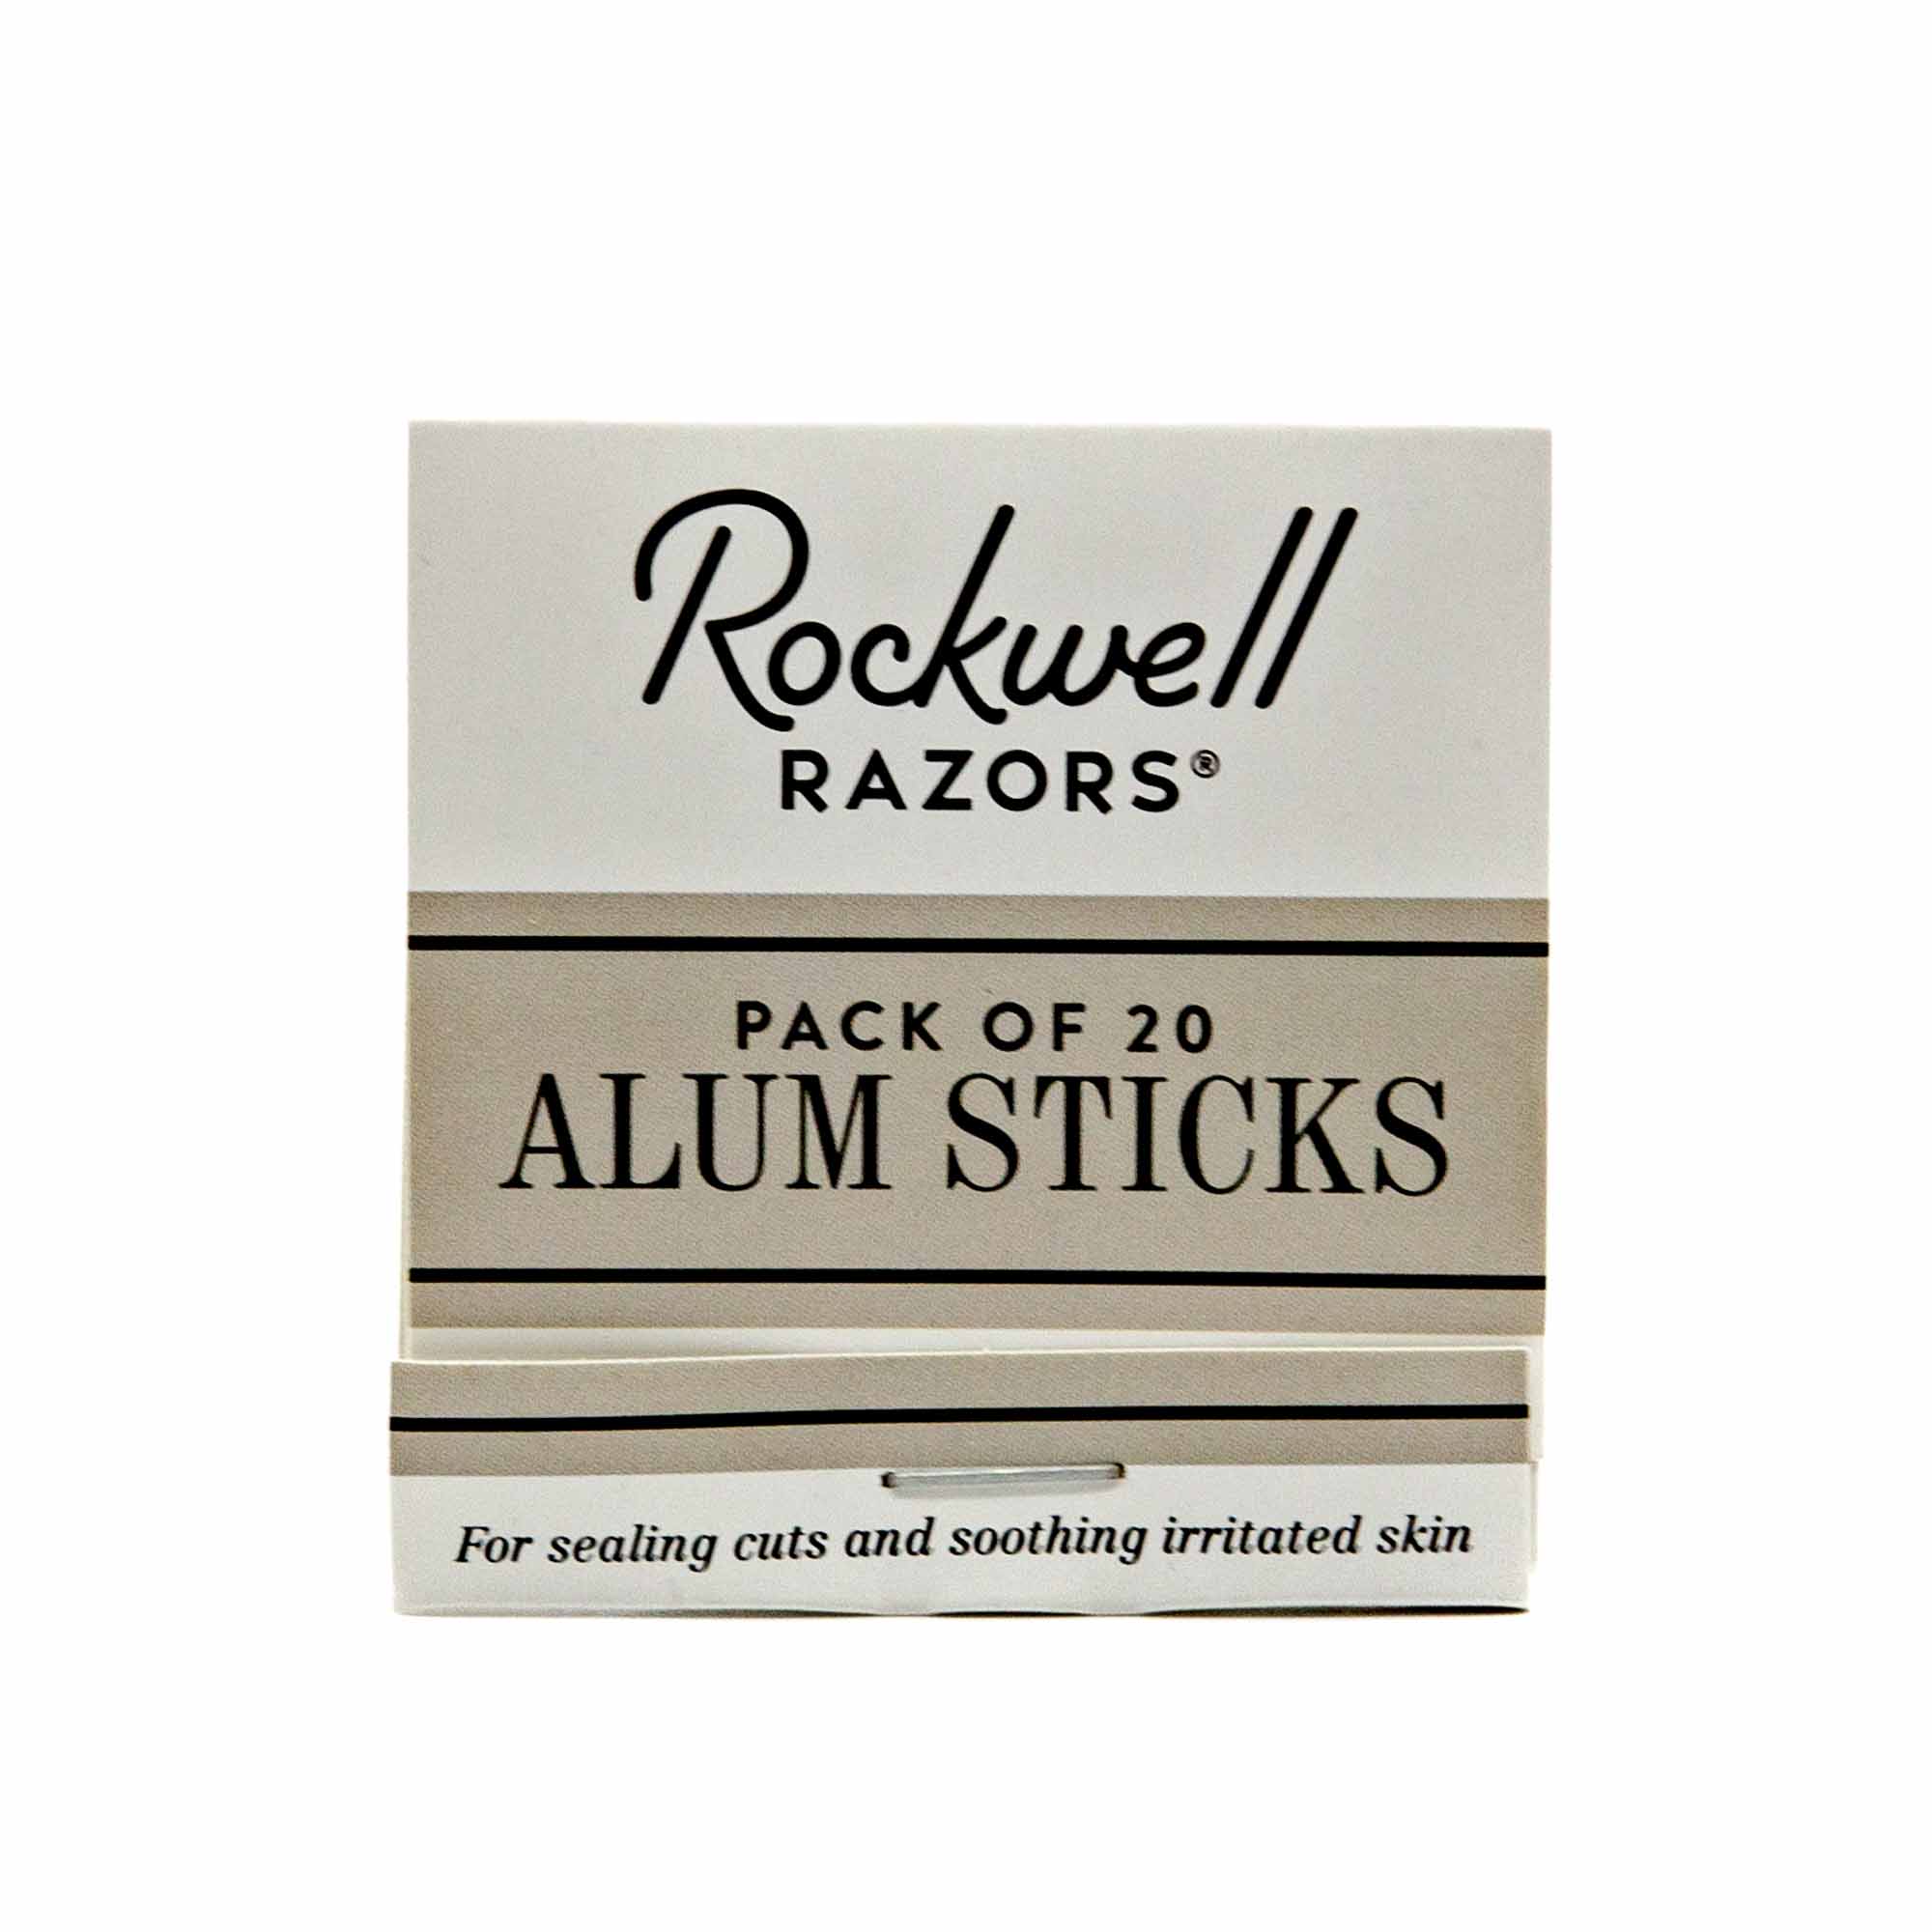 Rockwell Razor Alum Sticks 20 pack - Mortise And Tenon